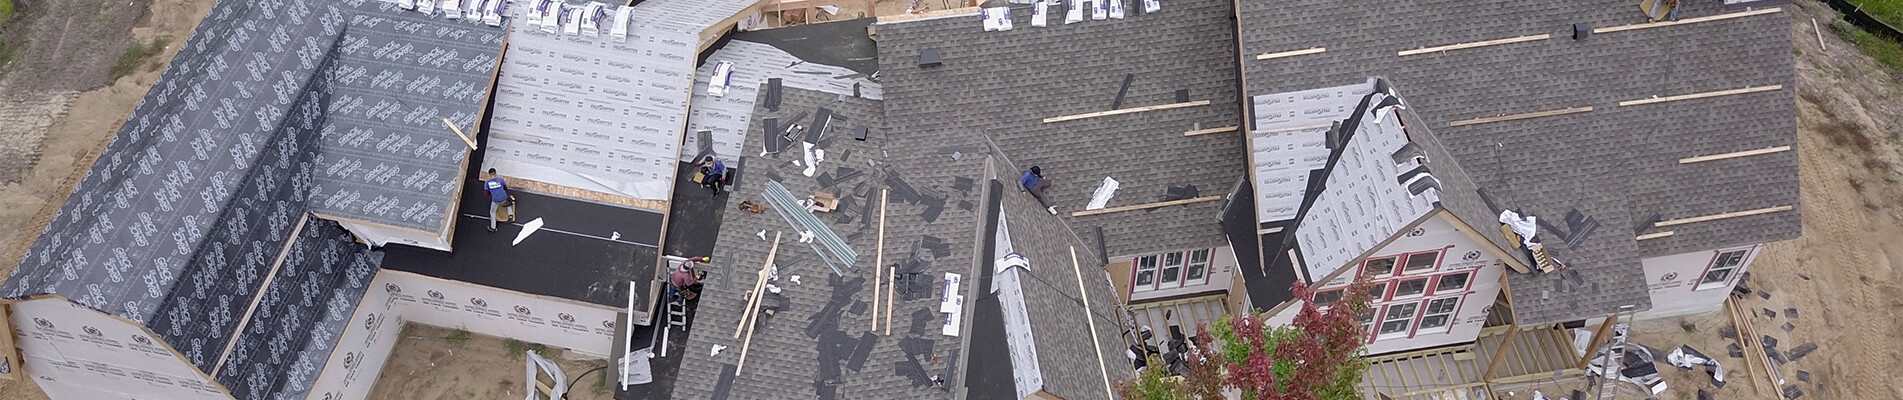 roofing-siding-company-process.jpg